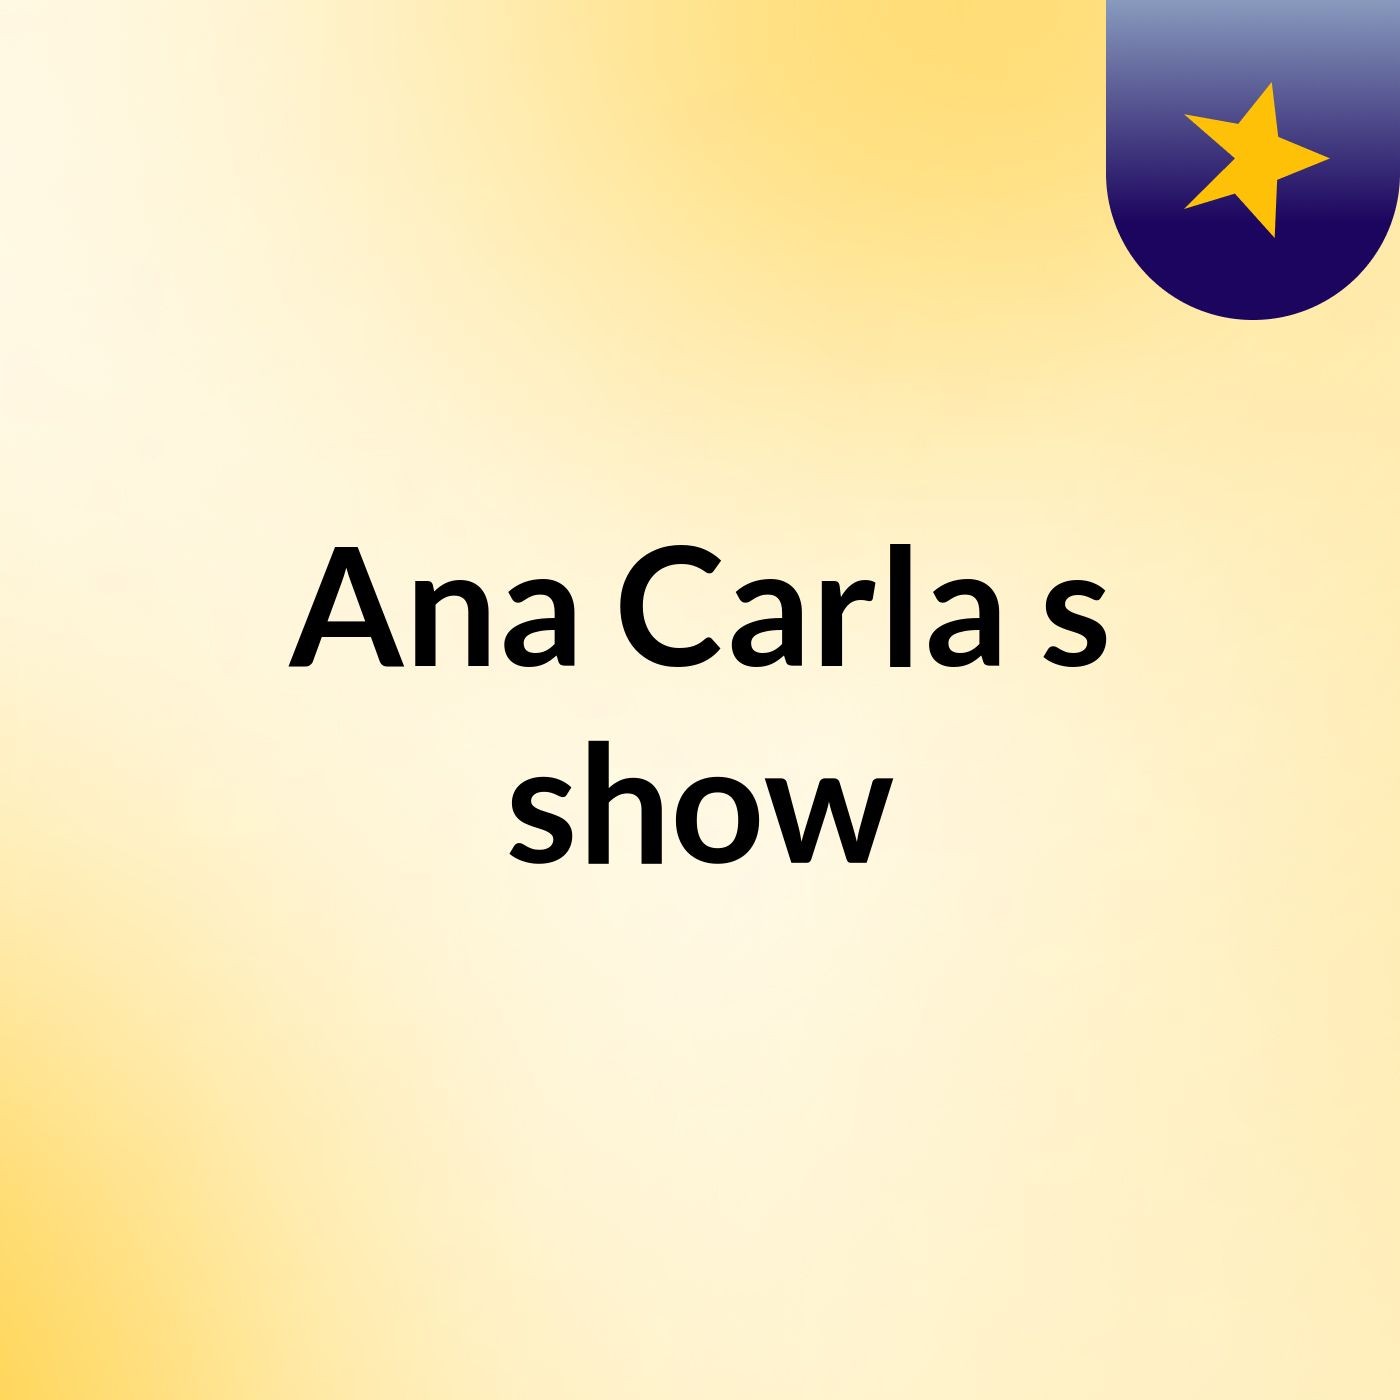 Ana Carla's show